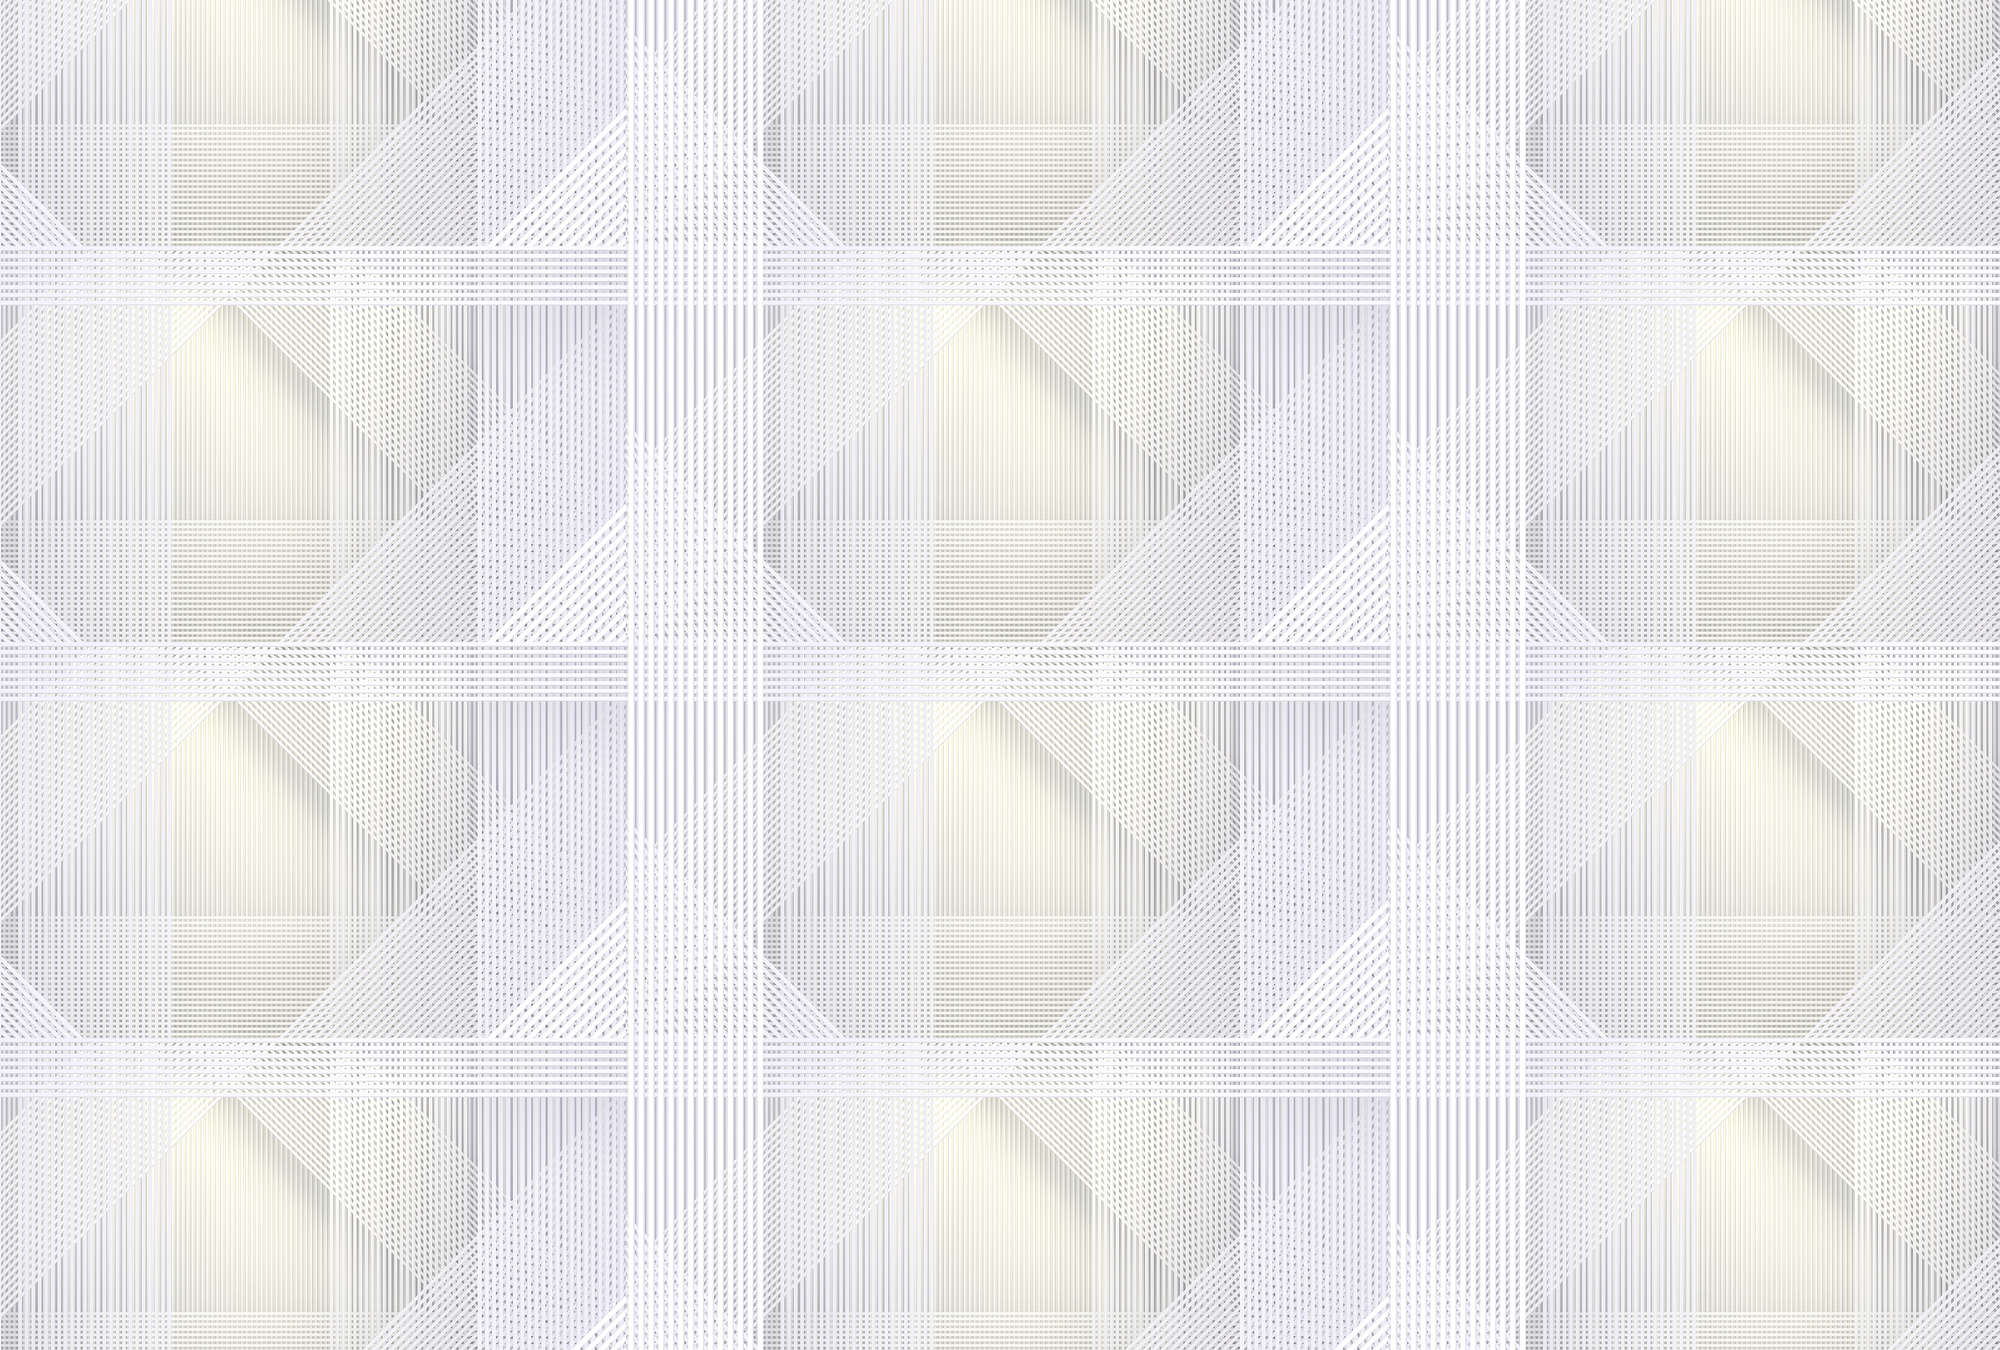             Strings 1 - Digital behang geometrisch streeppatroon - Geel, Grijs | Matte gladde vlieseline
        